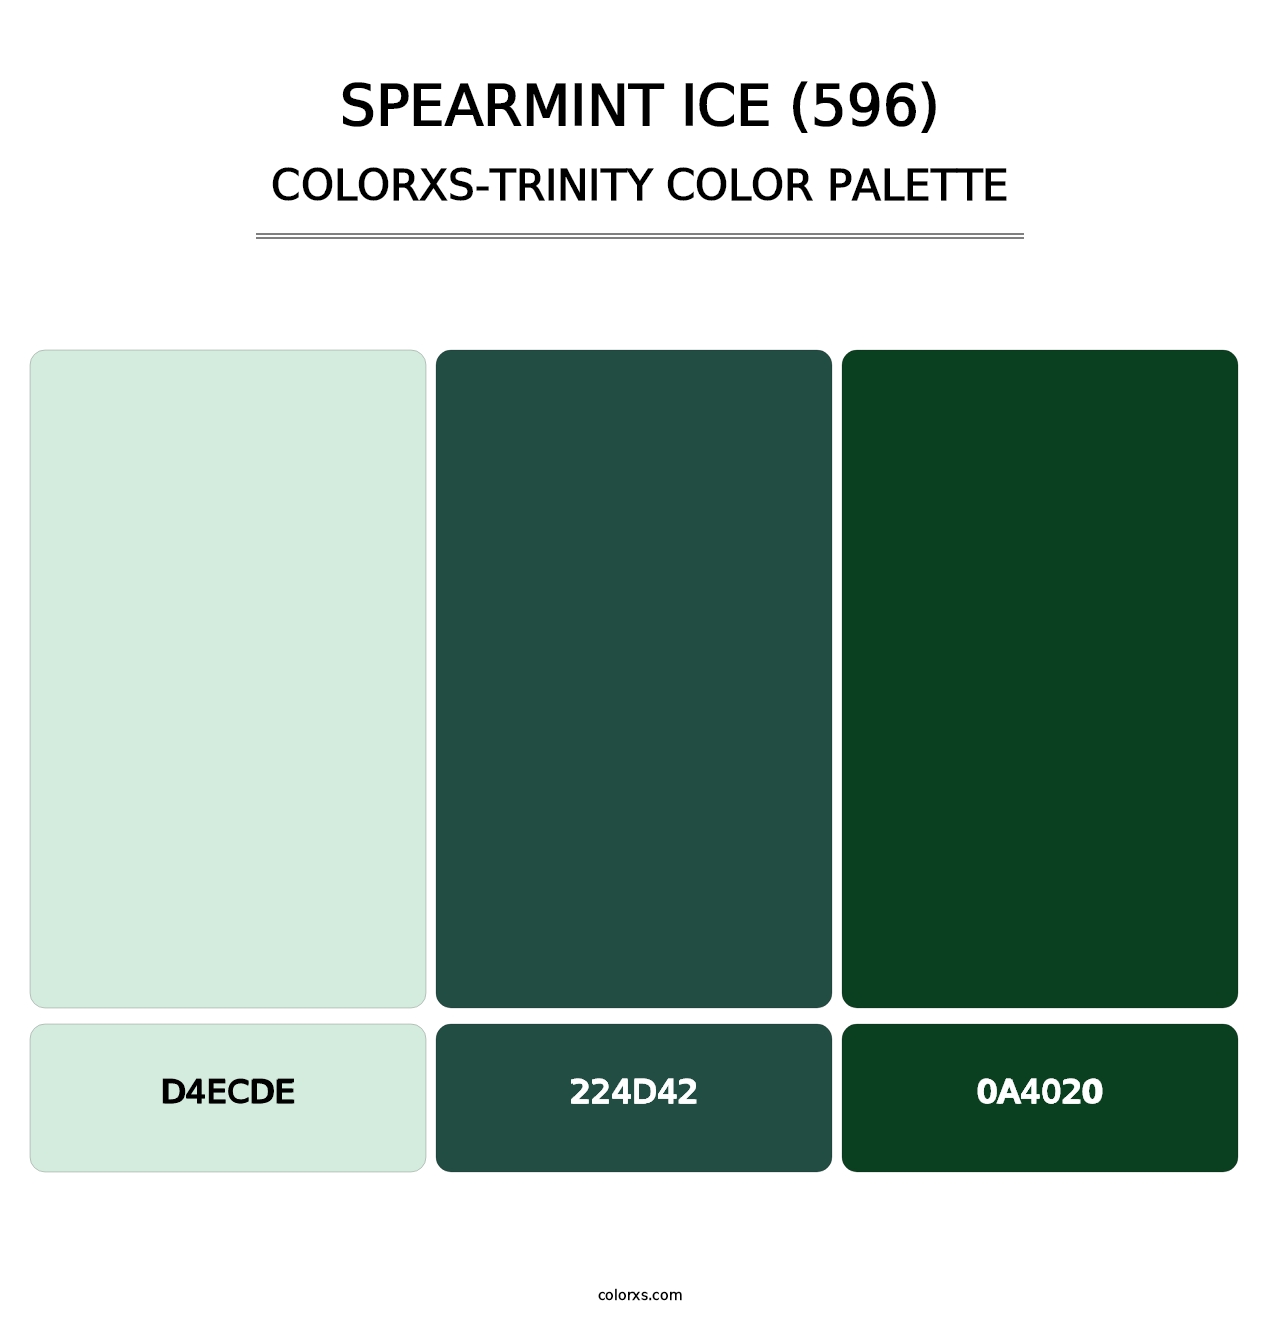 Spearmint Ice (596) - Colorxs Trinity Palette